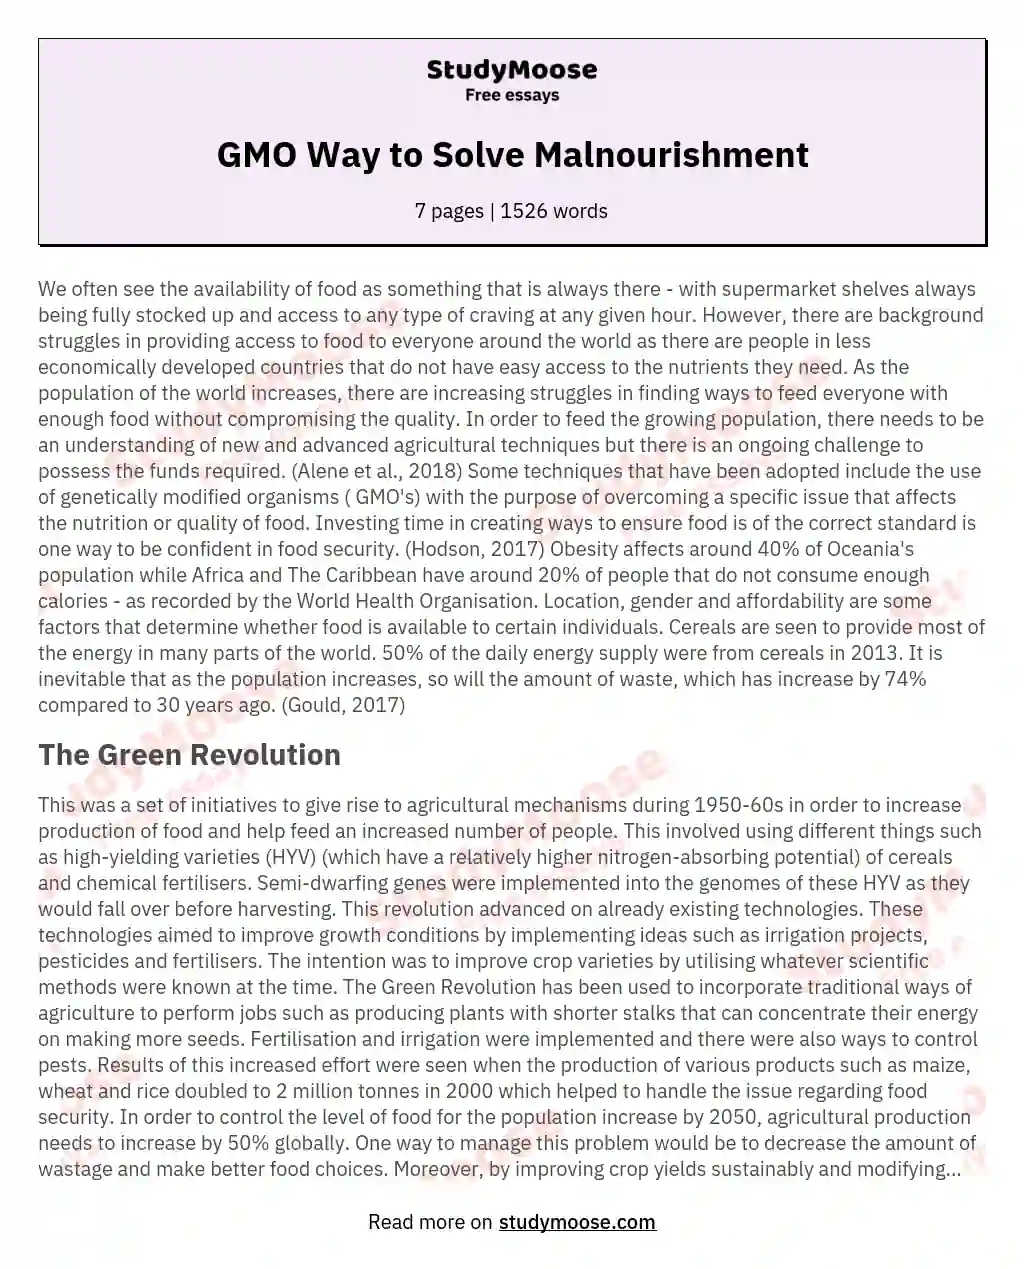 GMO Way to Solve Malnourishment essay